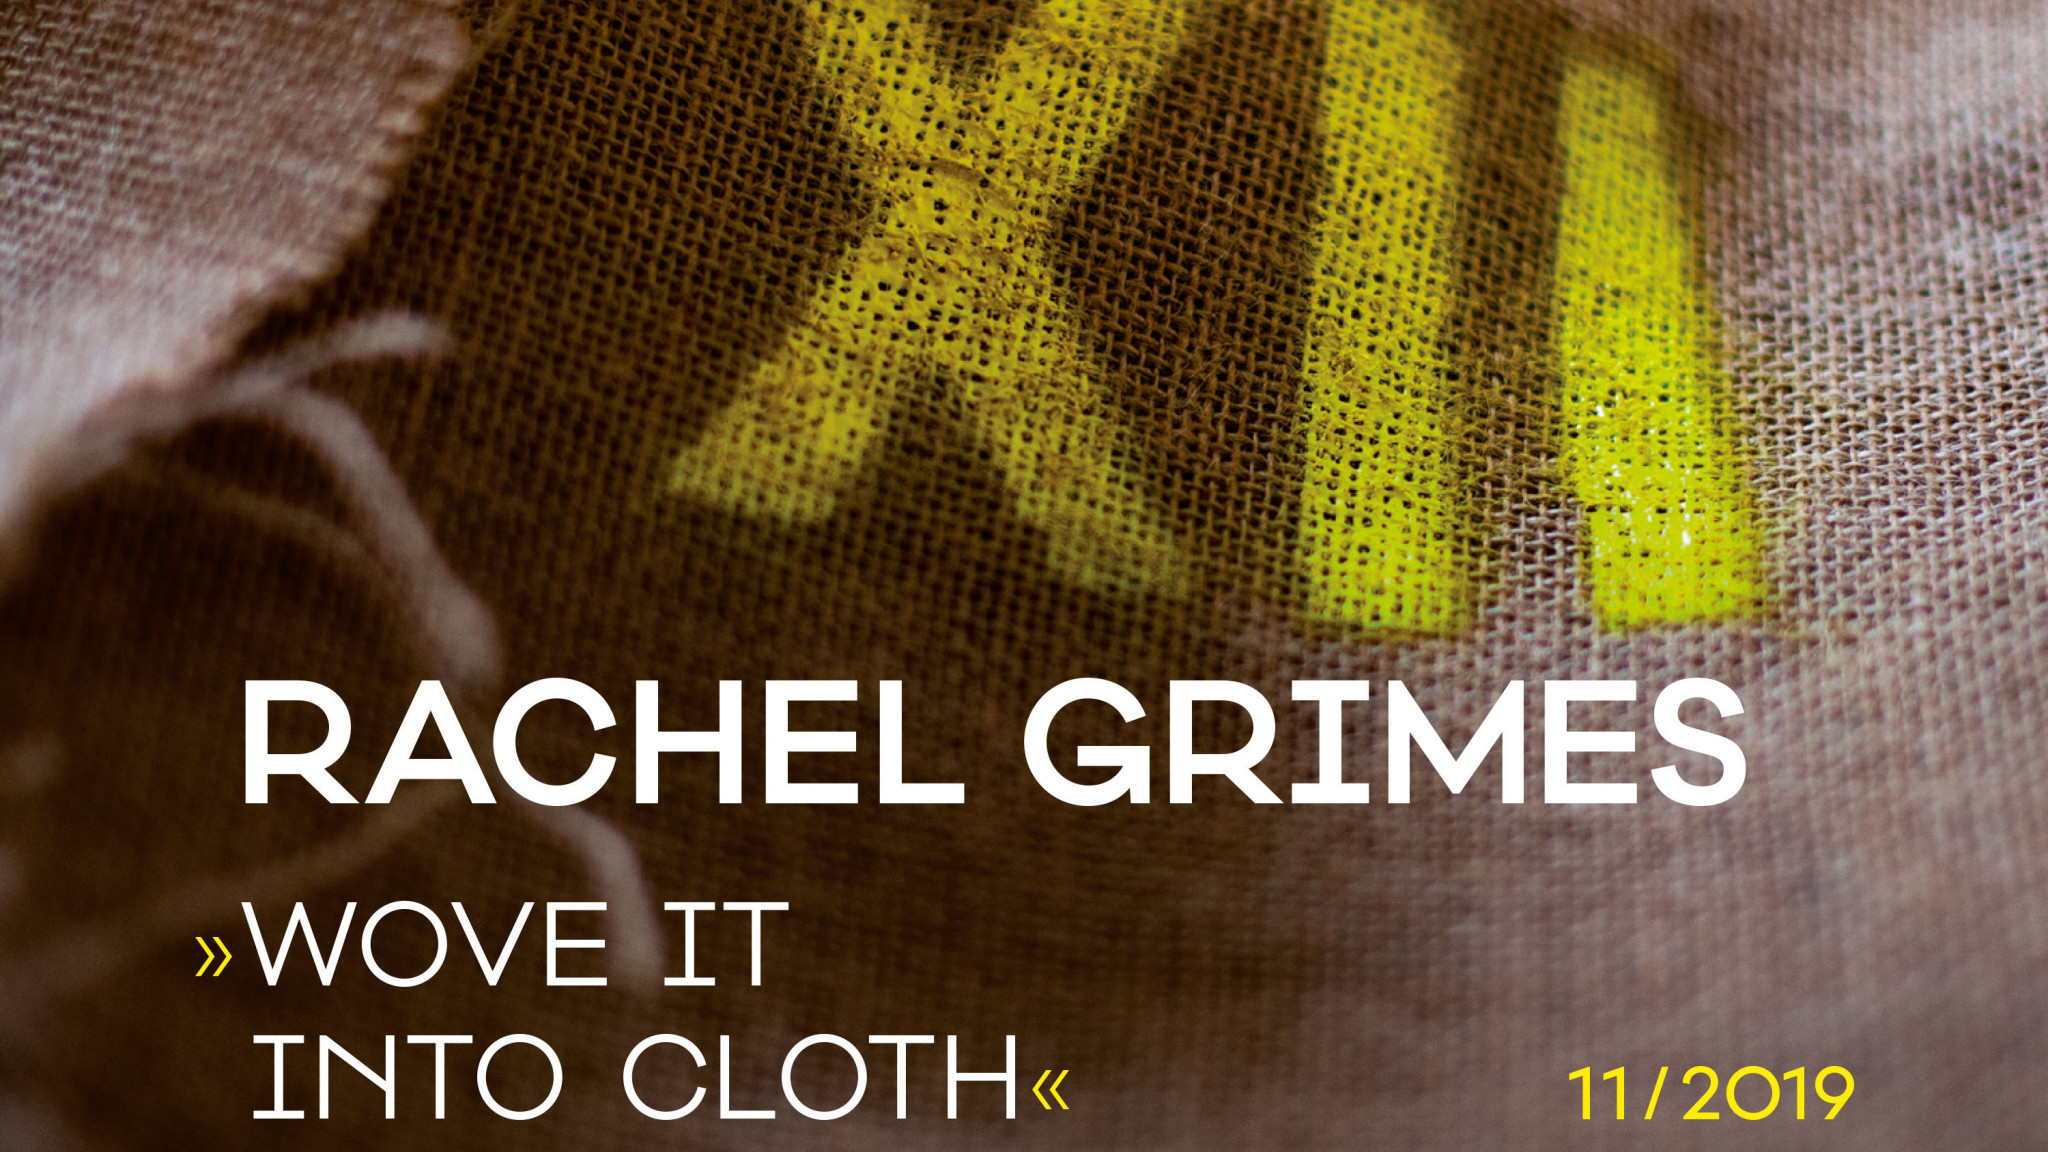 Bilder eines Lebens - Rachel Grimes' "Wove It Into Cloth"